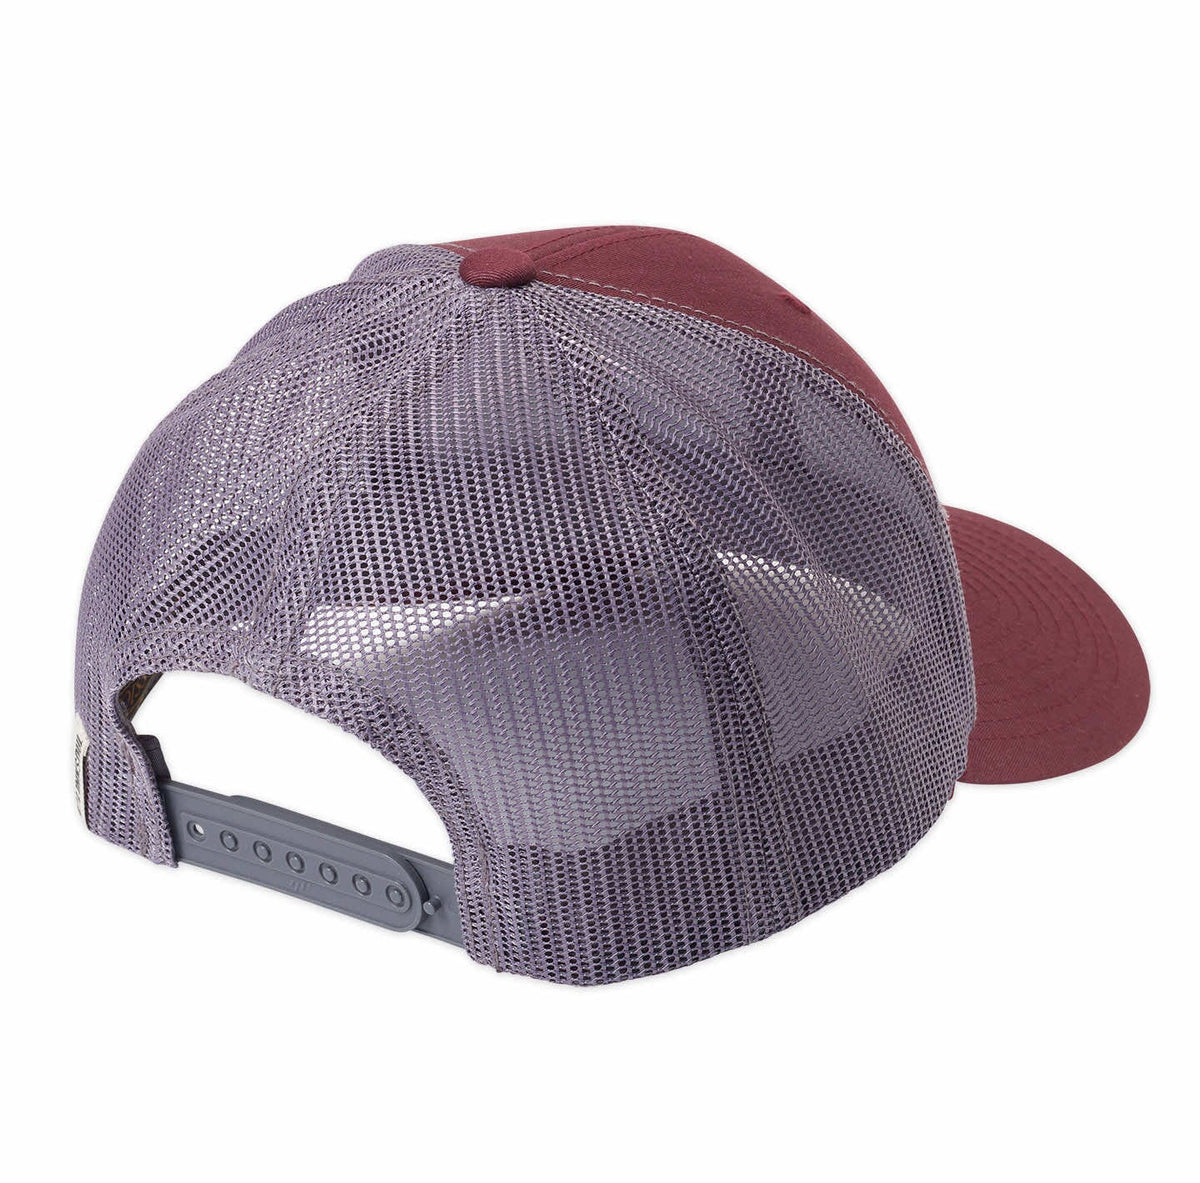 Emblem Patch Two-Tone Snapback Hat